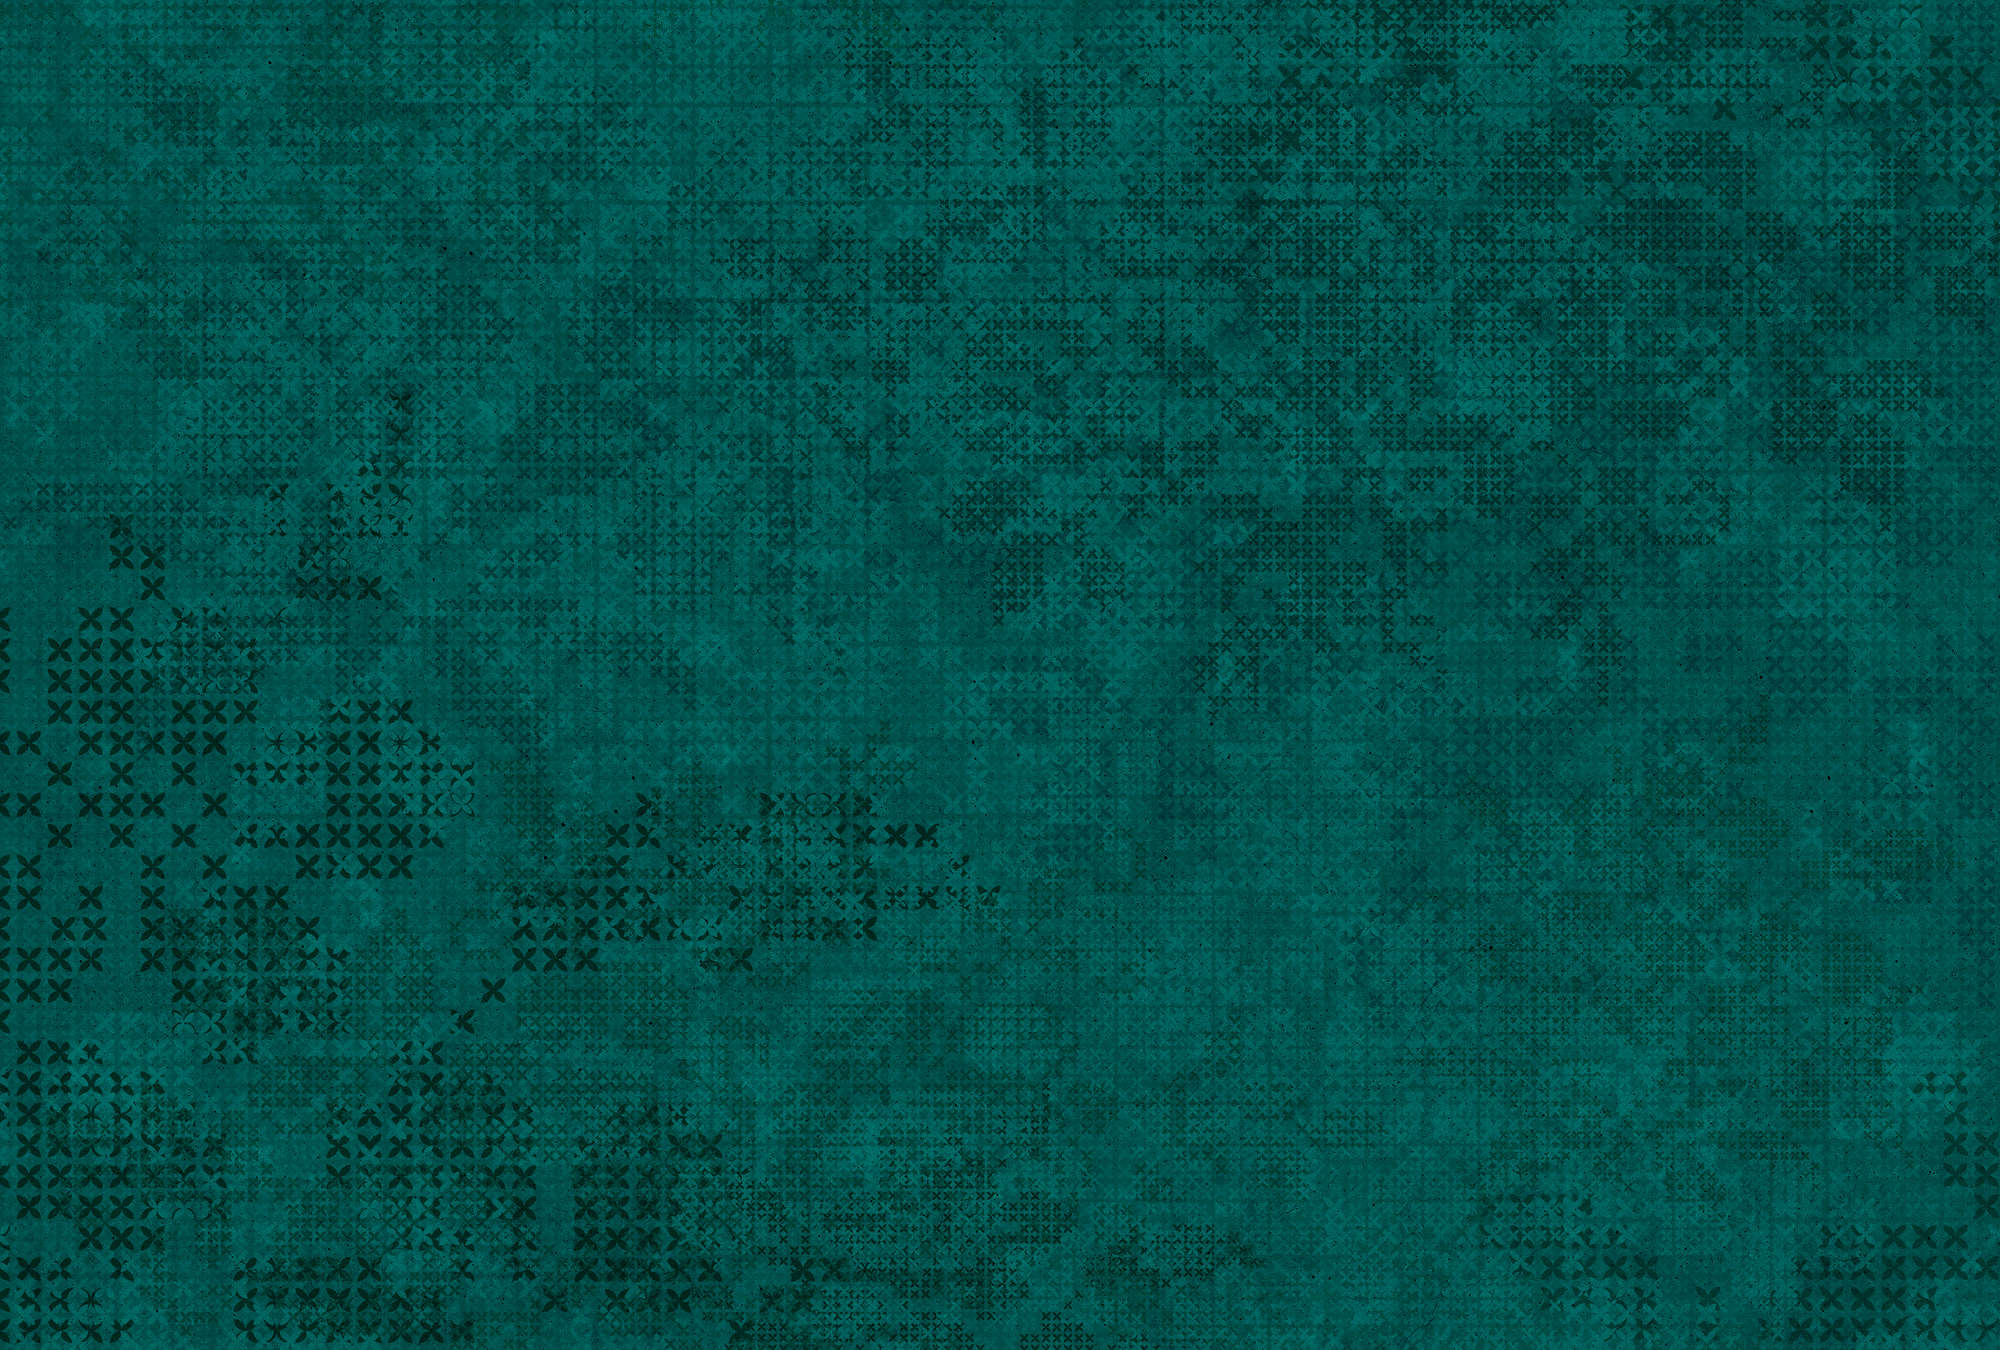             Carta da parati con motivo a croce in stile pixel - Verde, nero
        